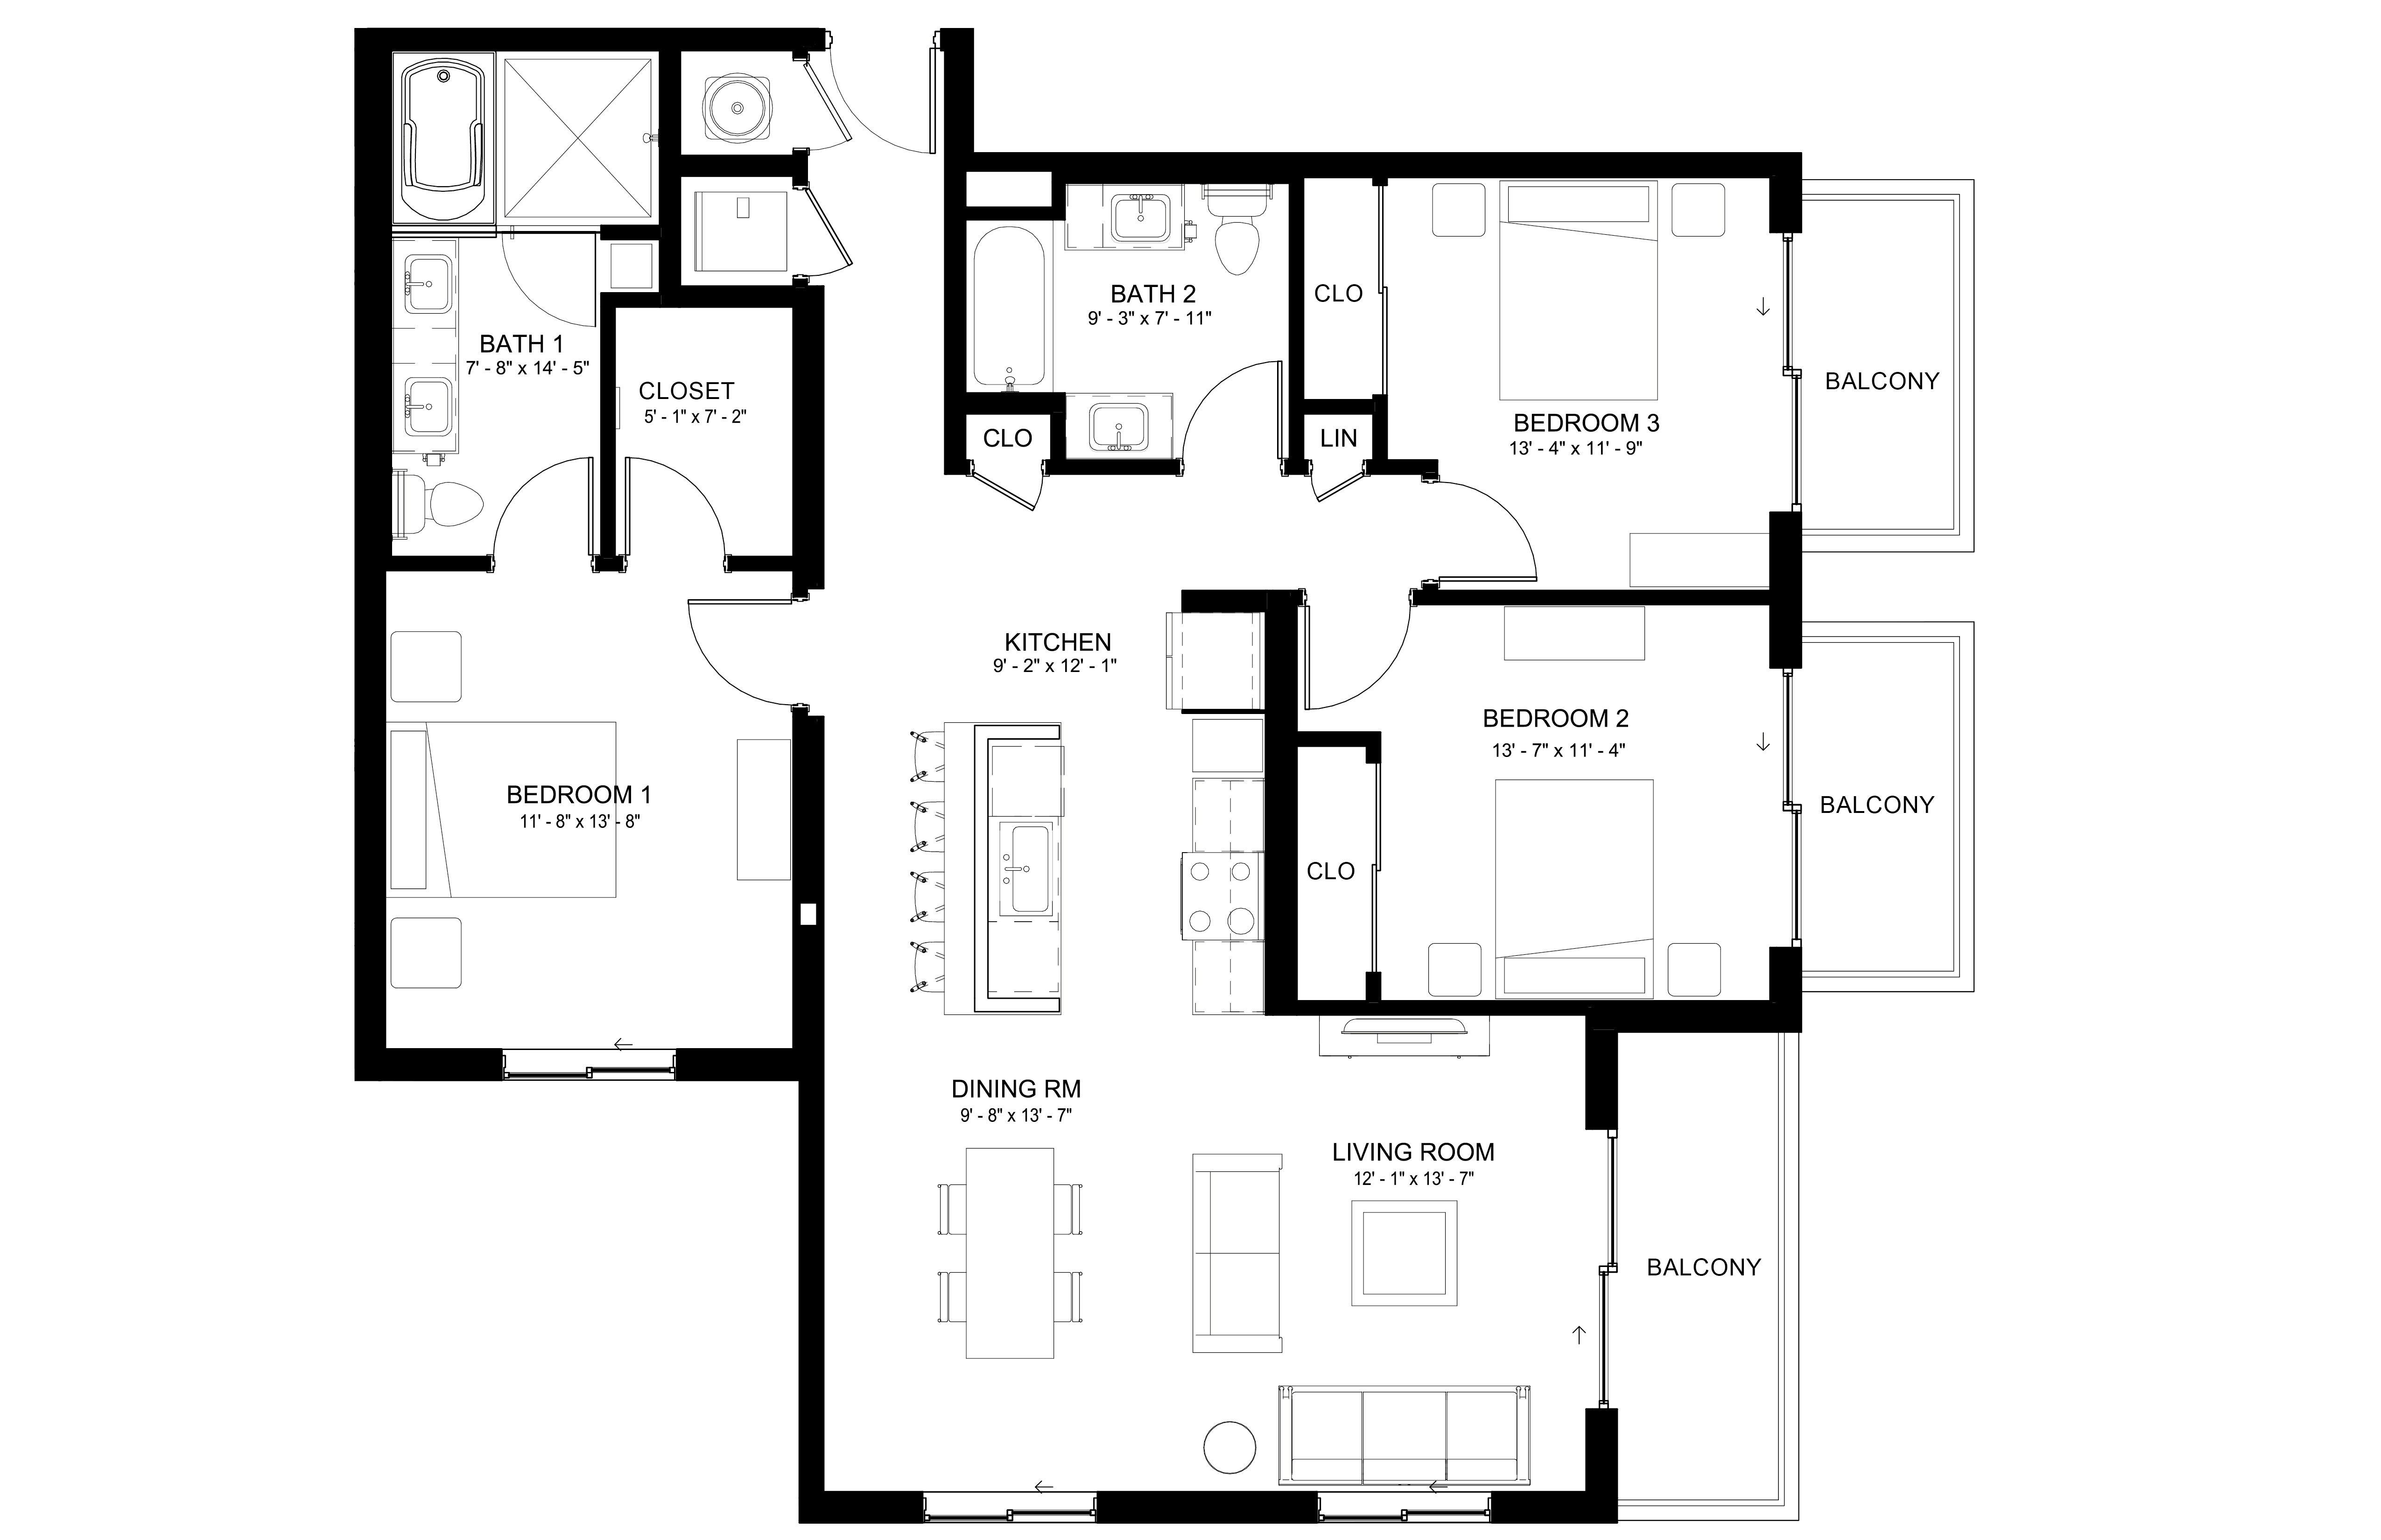 Apartment 411 floorplan